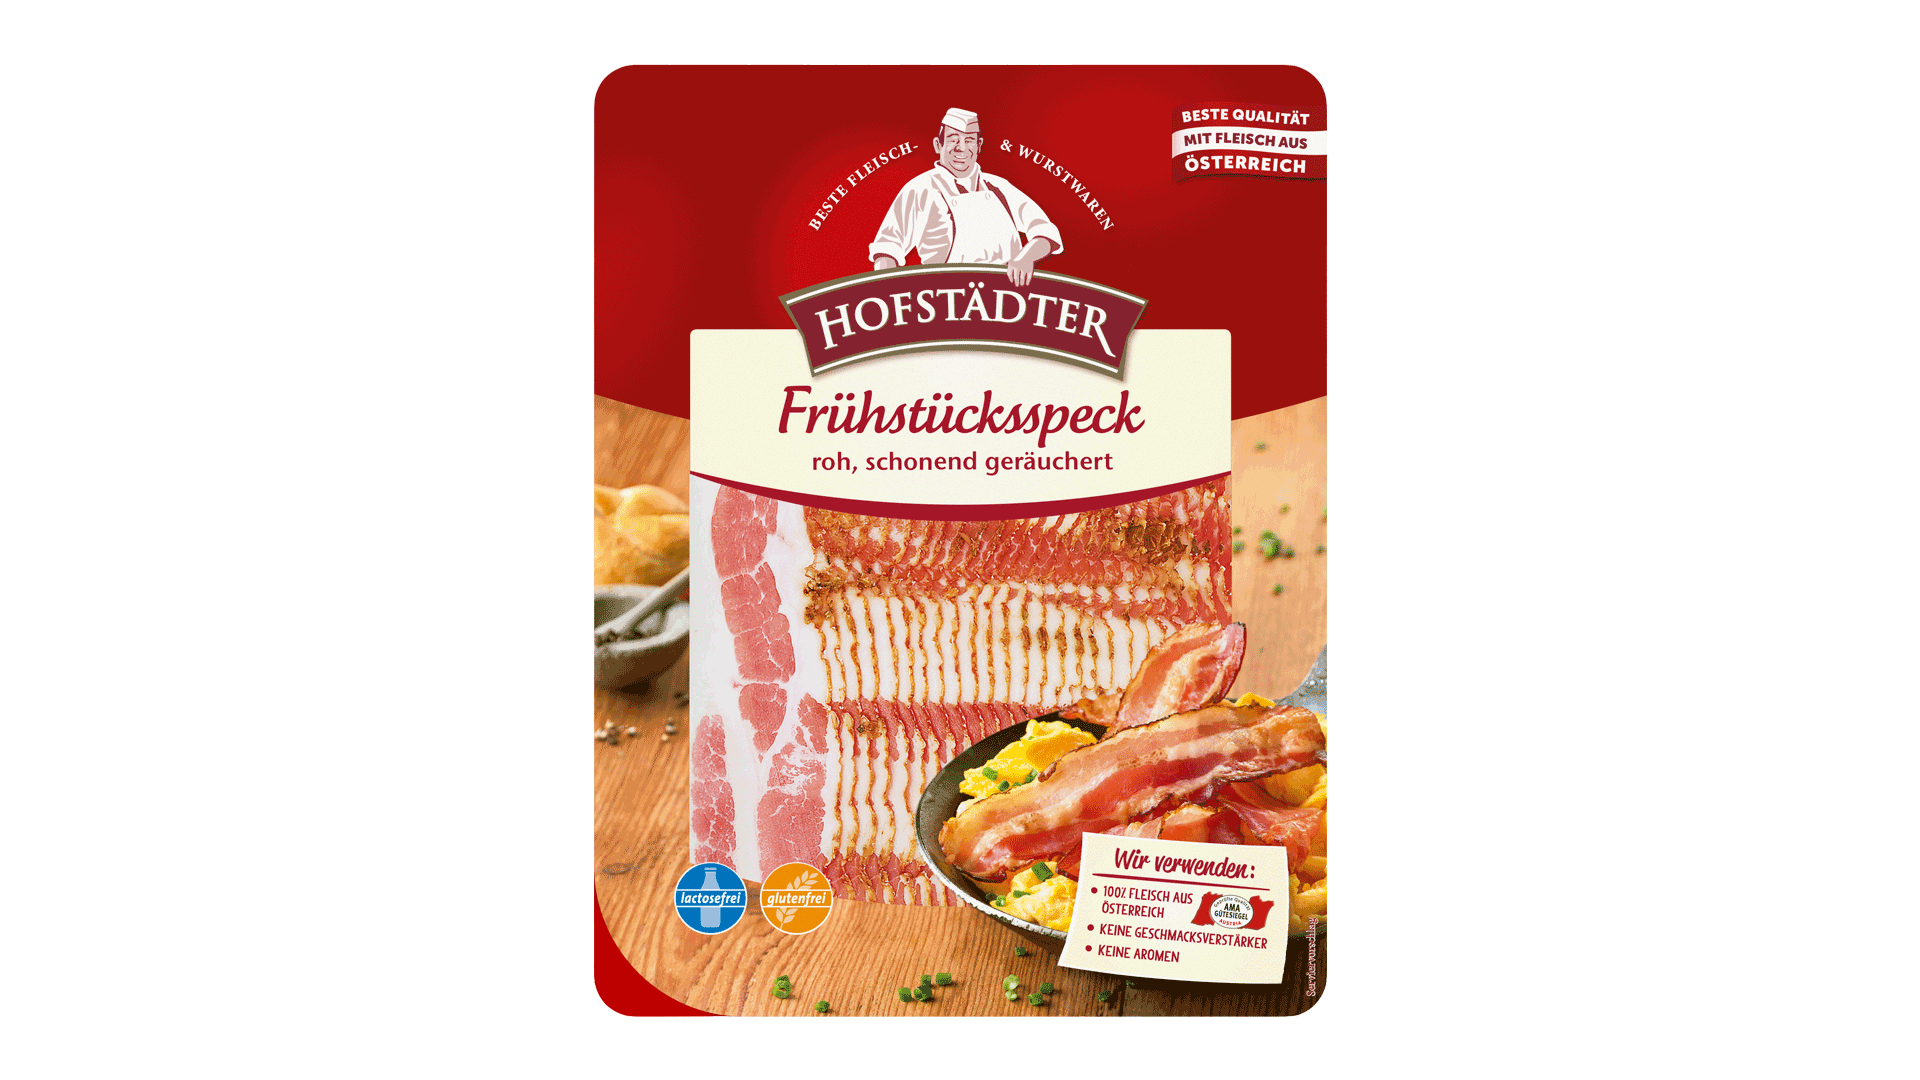 Hofstädter Frühstücksspeck Packshot